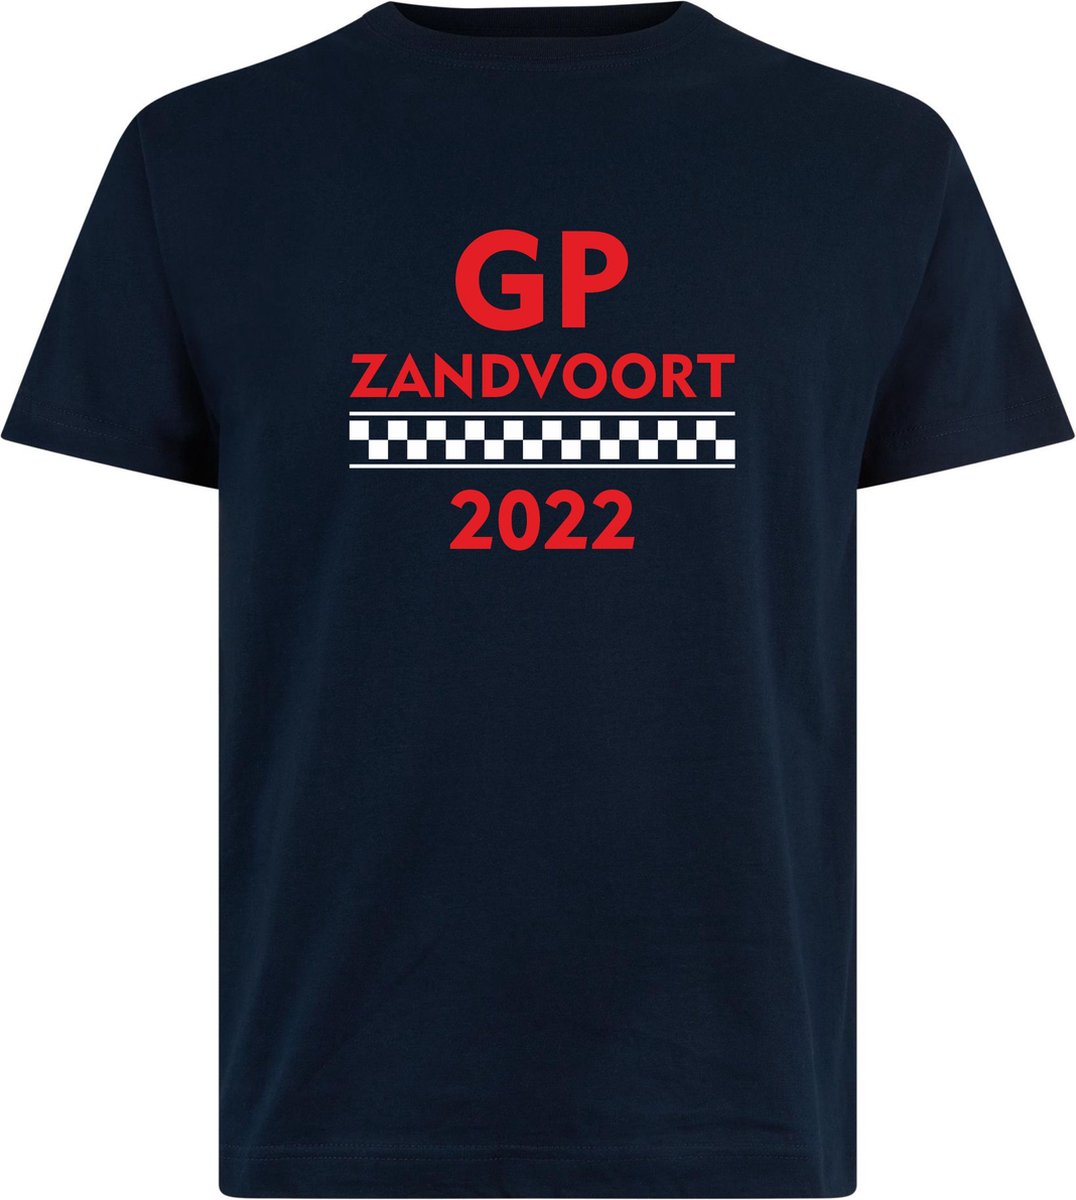 T-shirt GP Zandvoort2022 | Max Verstappen / Red Bull Racing / Formule 1 fan | Grand Prix Circuit Zandvoort | kleding shirt | Navy | maat 4XL